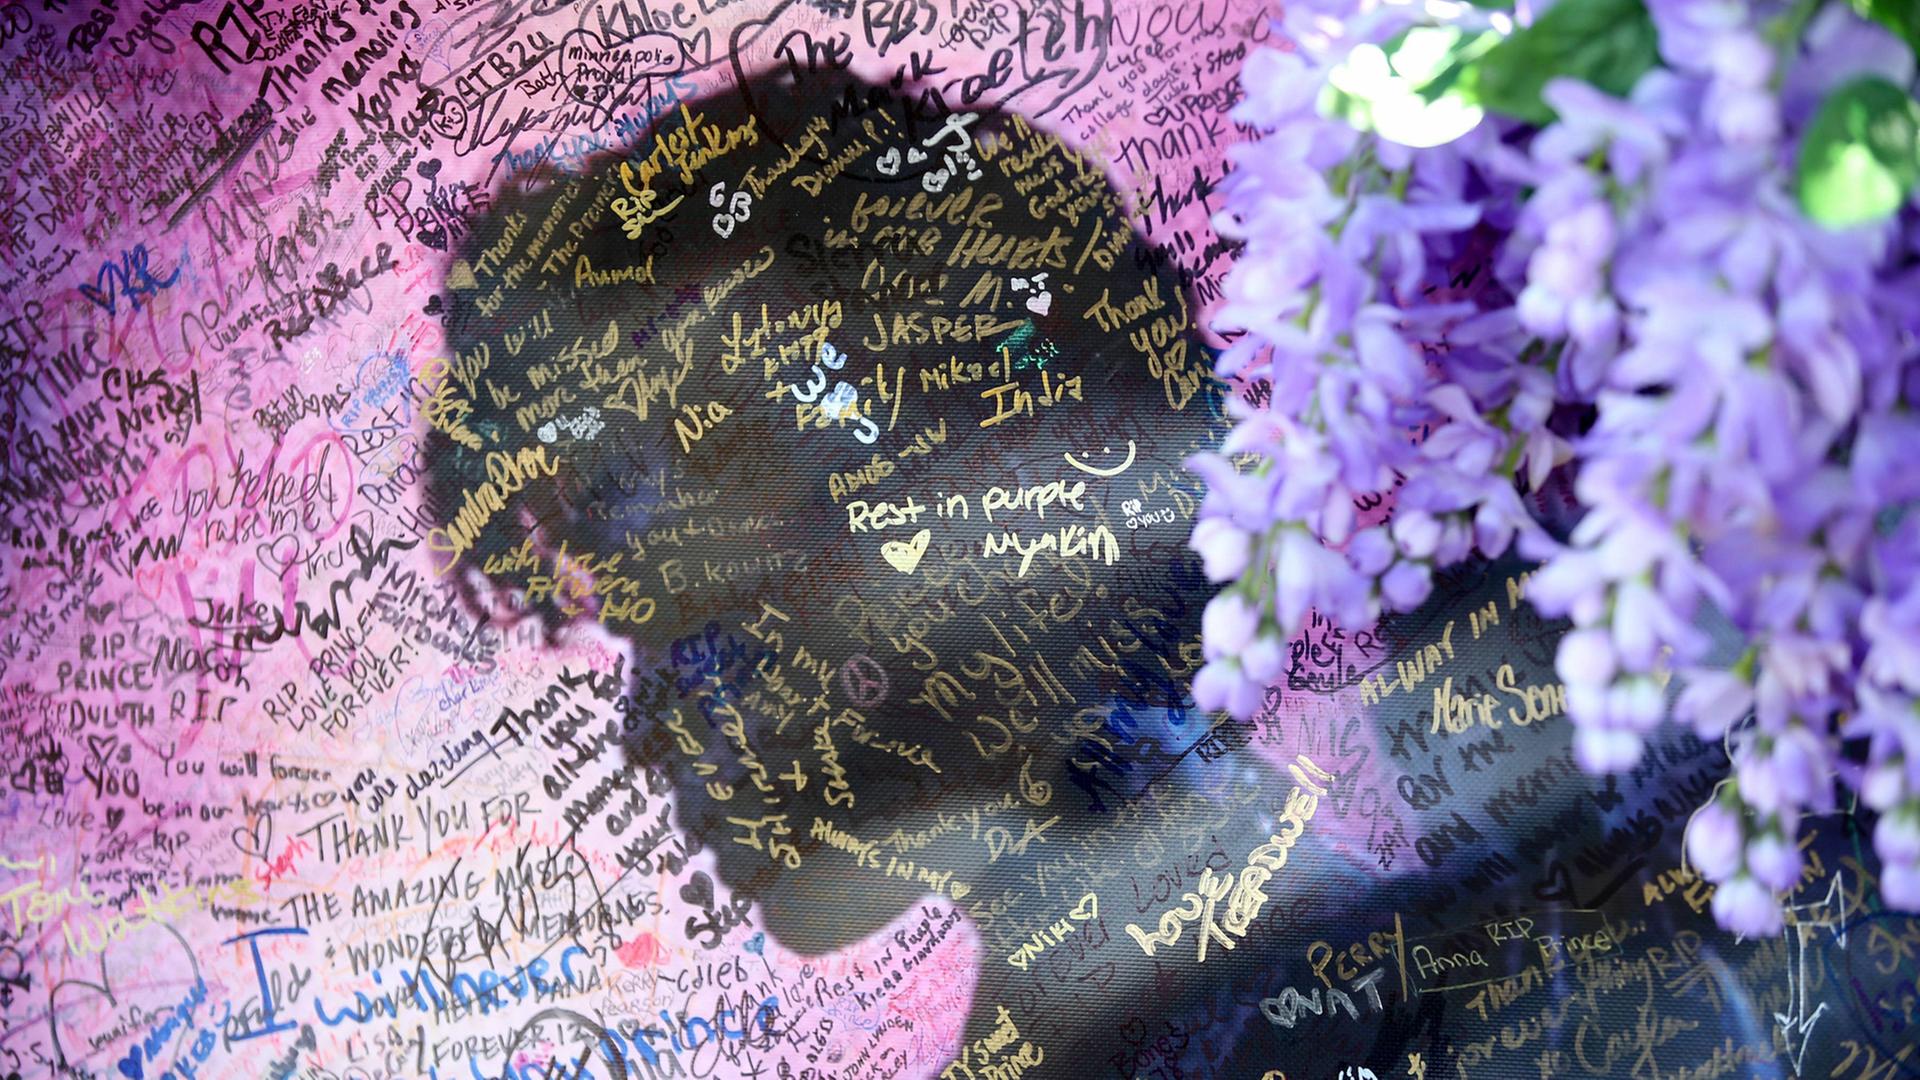 Fans erinnern vor den "Paisley Park Studios" an den verstorbenen Musiker Prince.